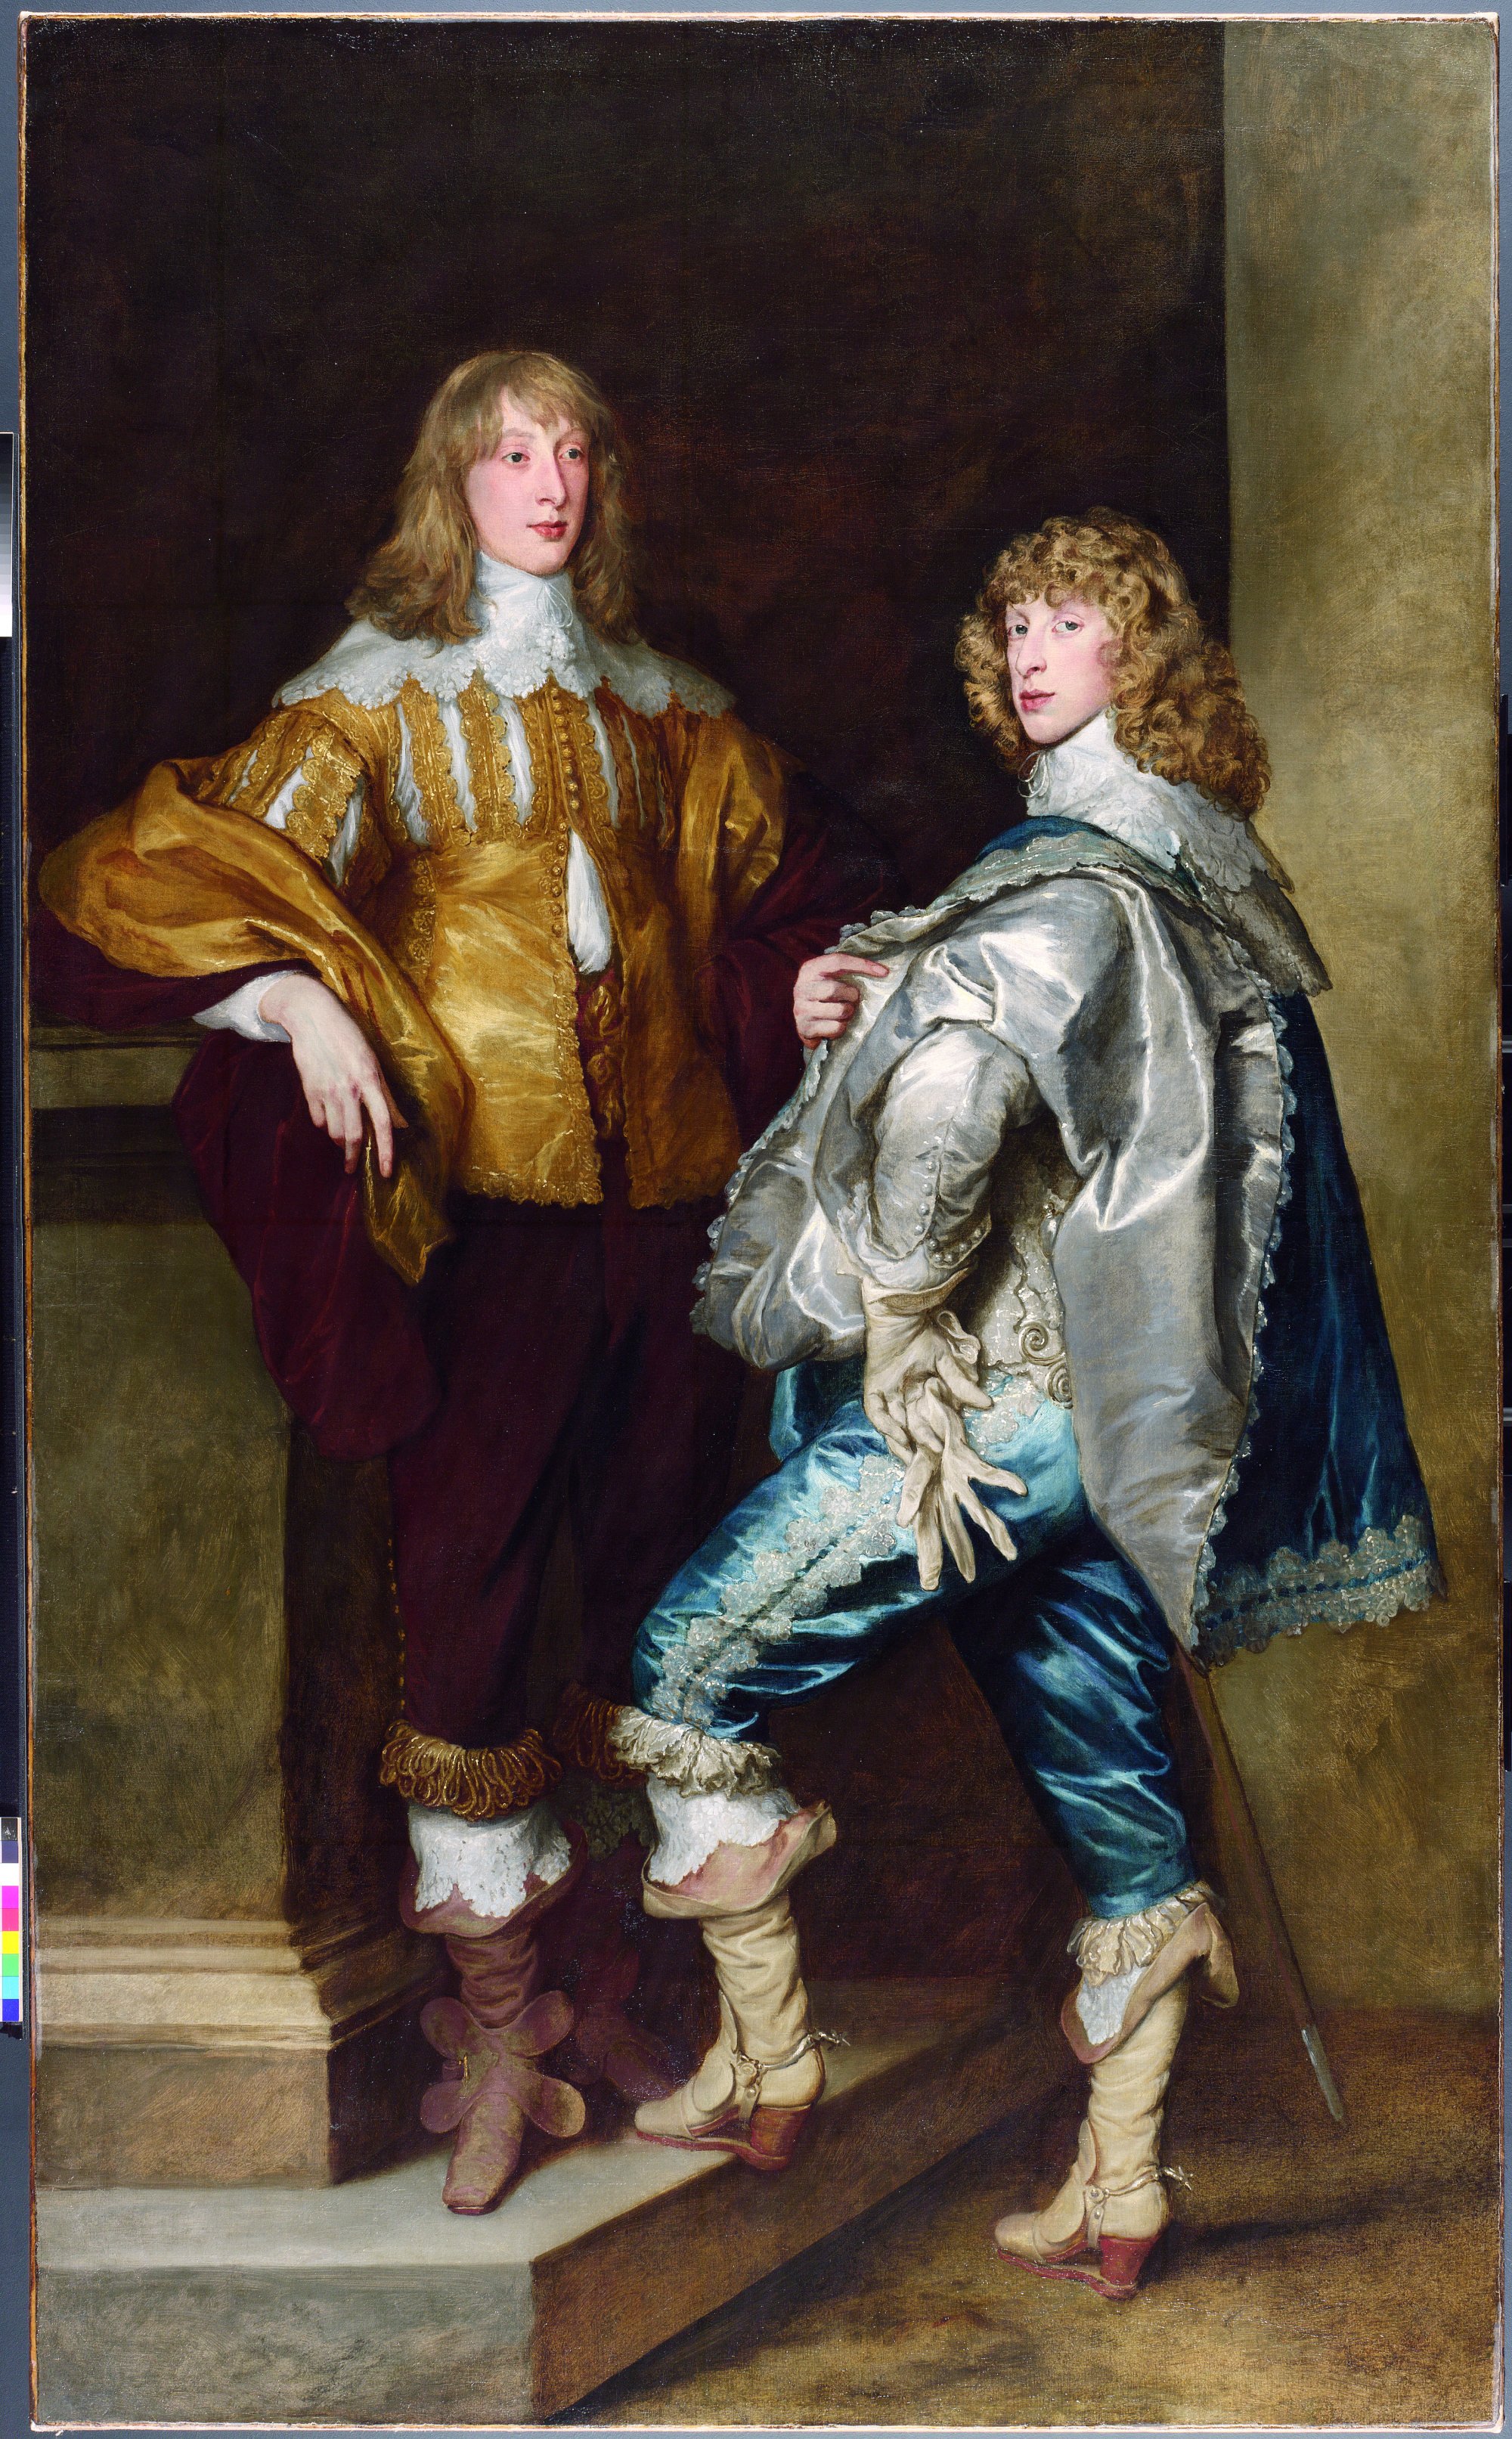 Lord John Stuart and his Brother, Lord Bernard Stuart. Photo: National Gallery